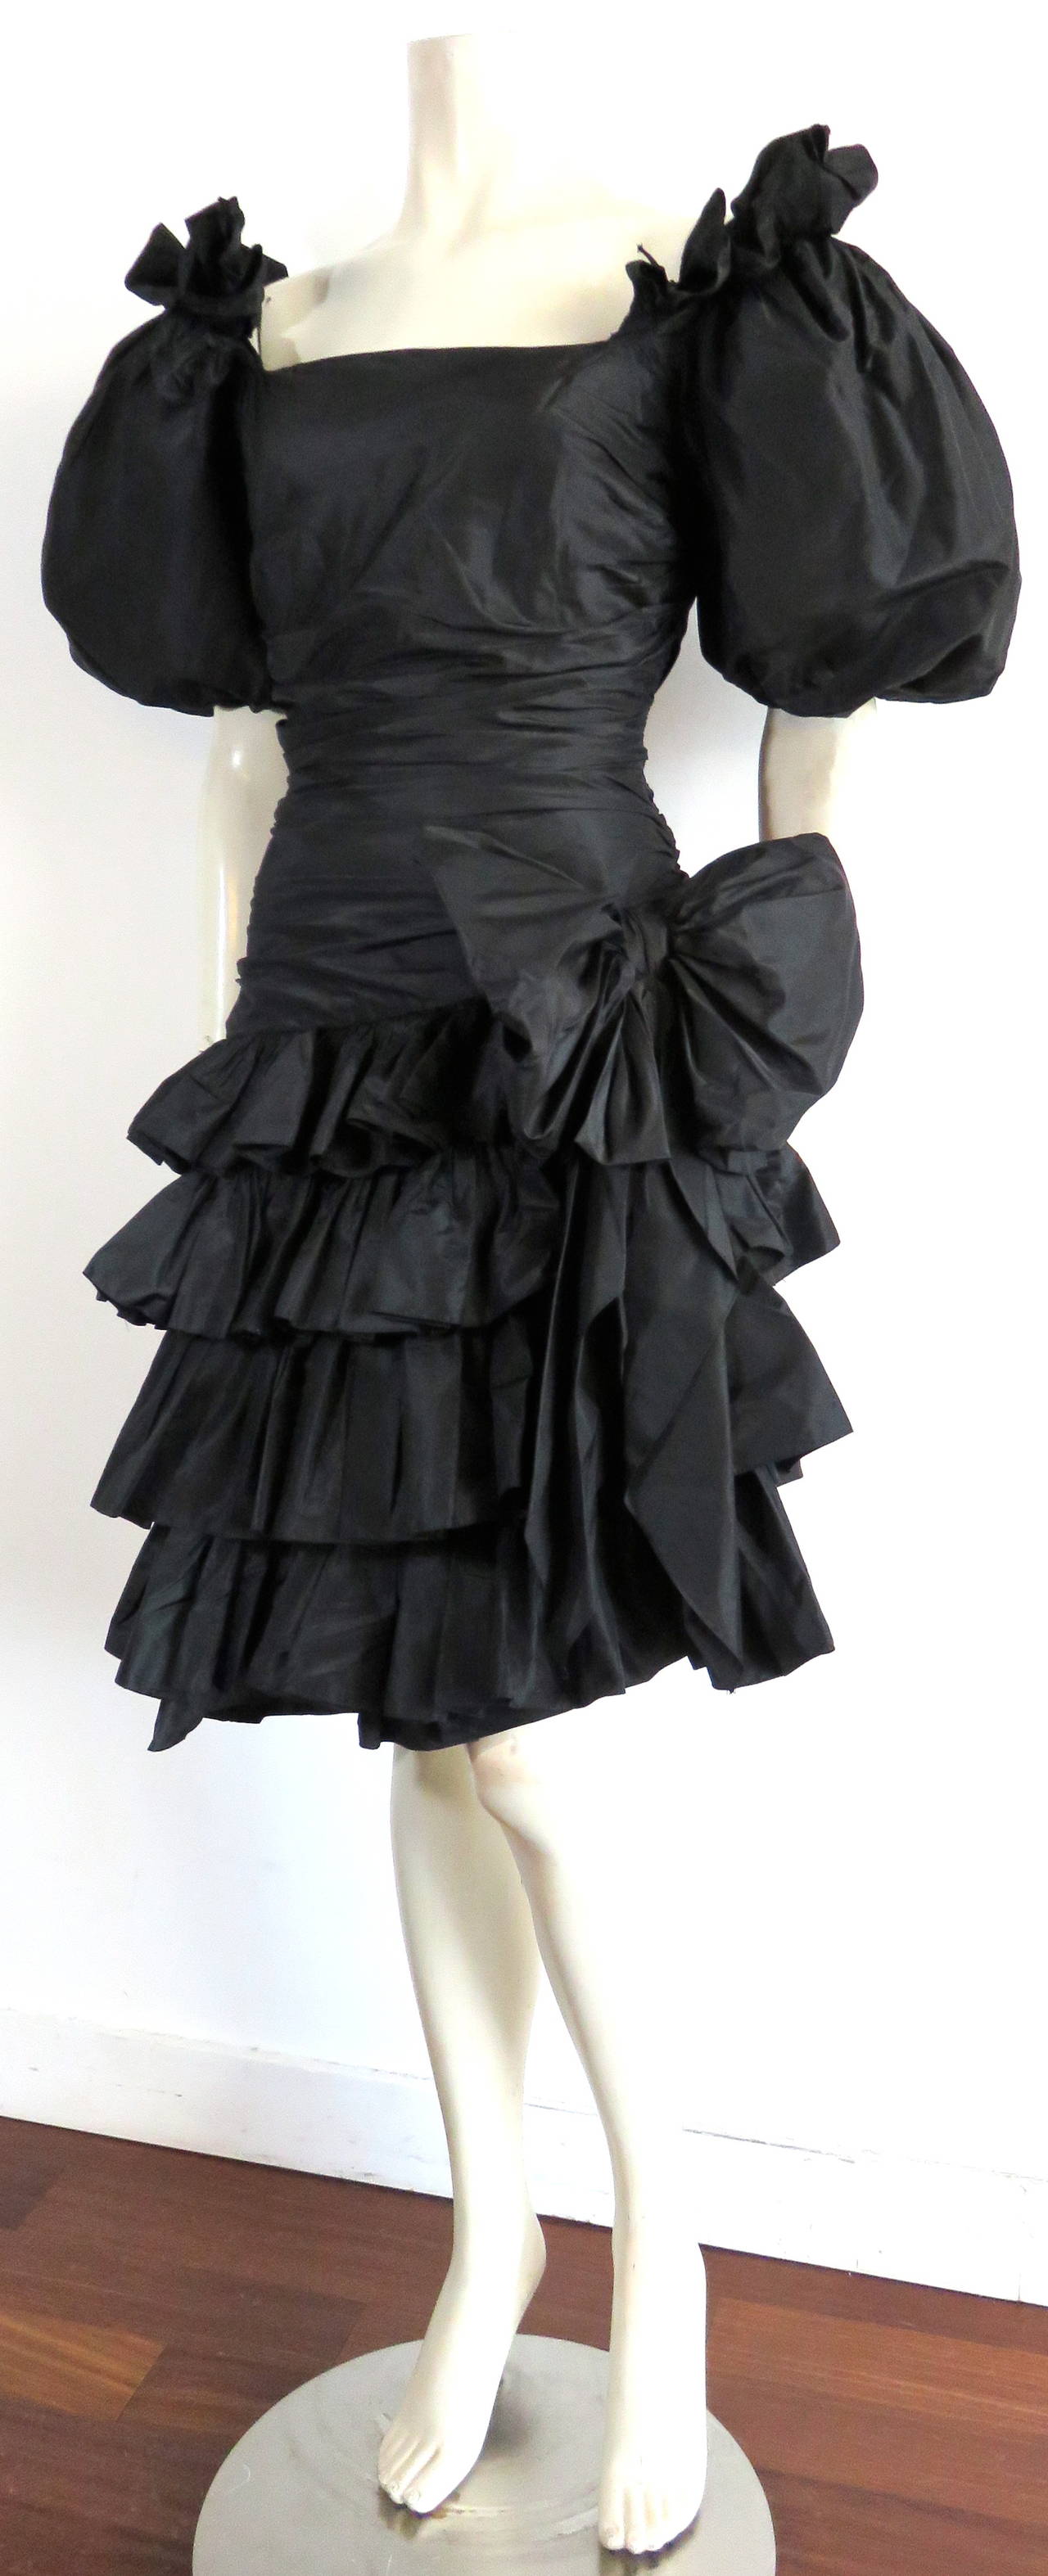 1980's OSCAR DE LA RENTA Flamenco inspired, silk taffeta evening dress.

Crisp, silk taffeta fabrication.

Oversized, 'balloon' style short sleeves with side, ruffled neckline detail.

Flamenco-style, angled bottom hem-line of dress with